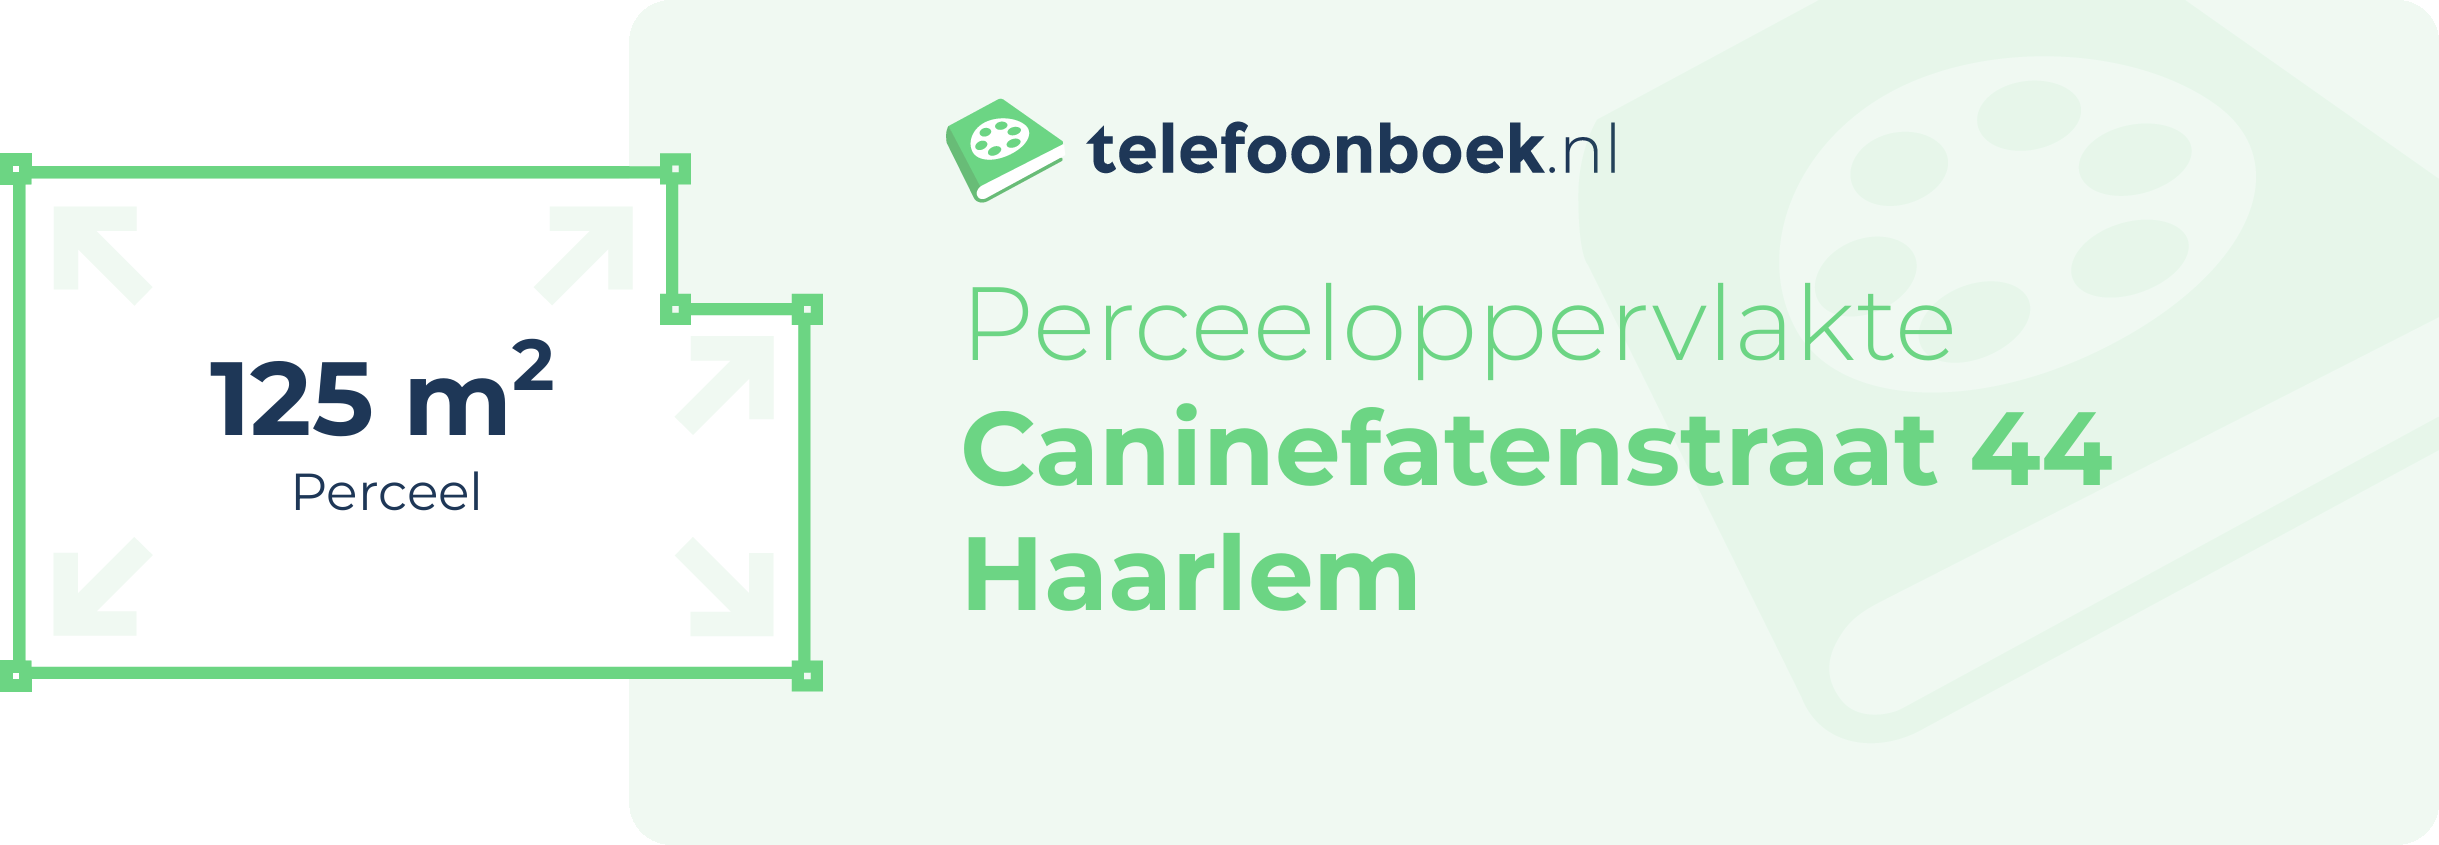 Perceeloppervlakte Caninefatenstraat 44 Haarlem